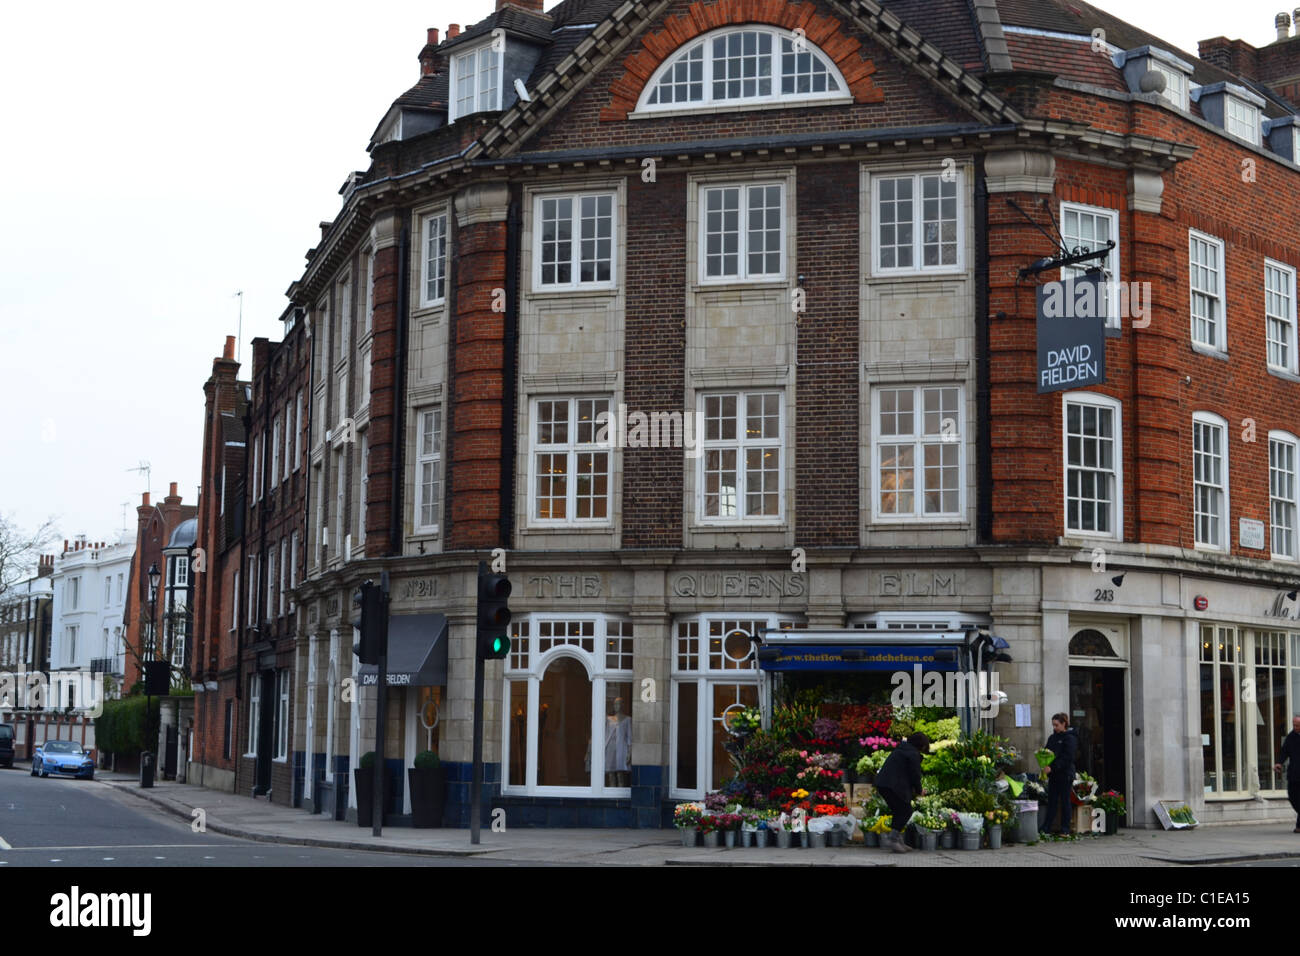 The florist's shop along the Fulham Road, Kensington & Chelsea. Beautiful red brick architecture. London, UK. ARTIFEX LUCIS Stock Photo